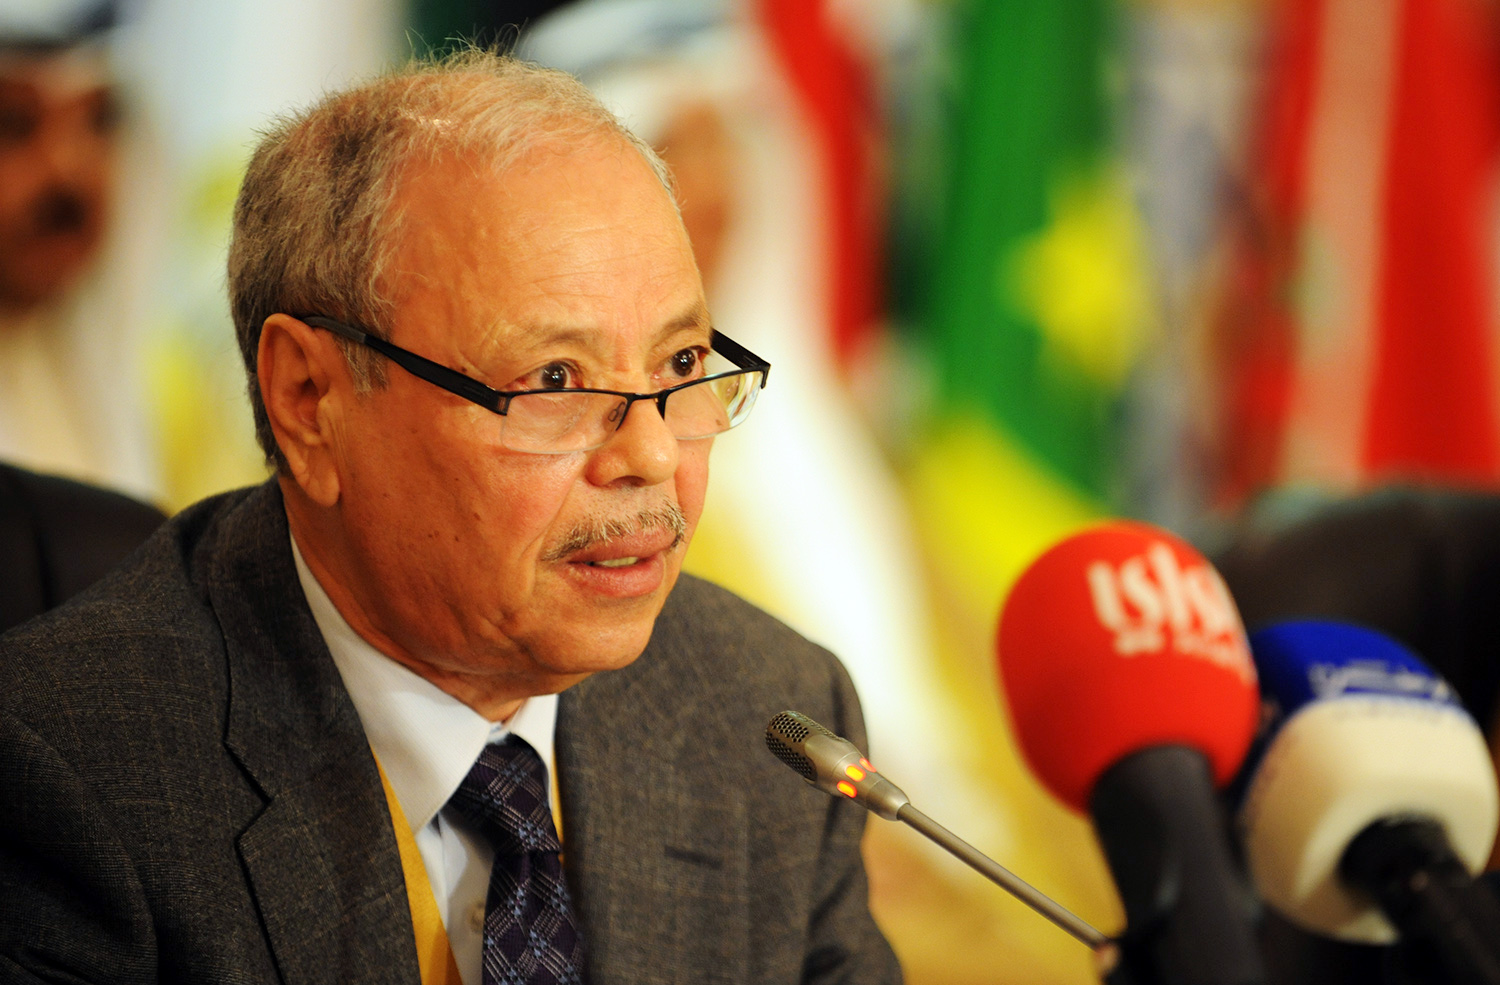 Ahmad Bin Hilly the Arab League Deputy Secretary General